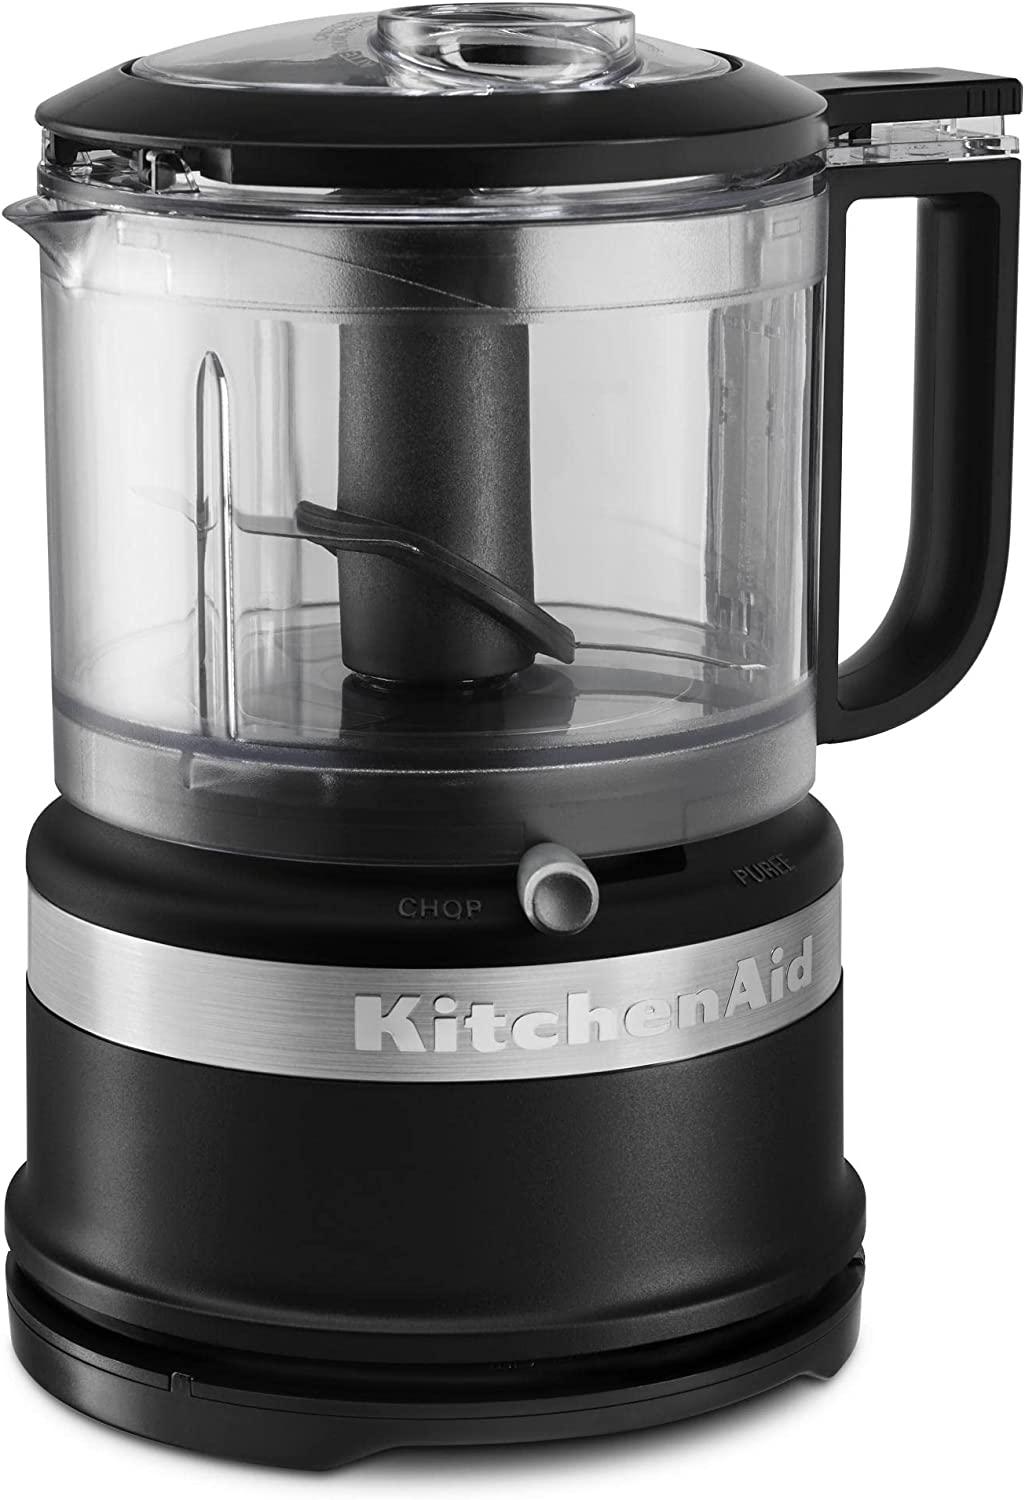 KitchenAid 5 Cup Food Chopper - KFC0516, Contour Silver